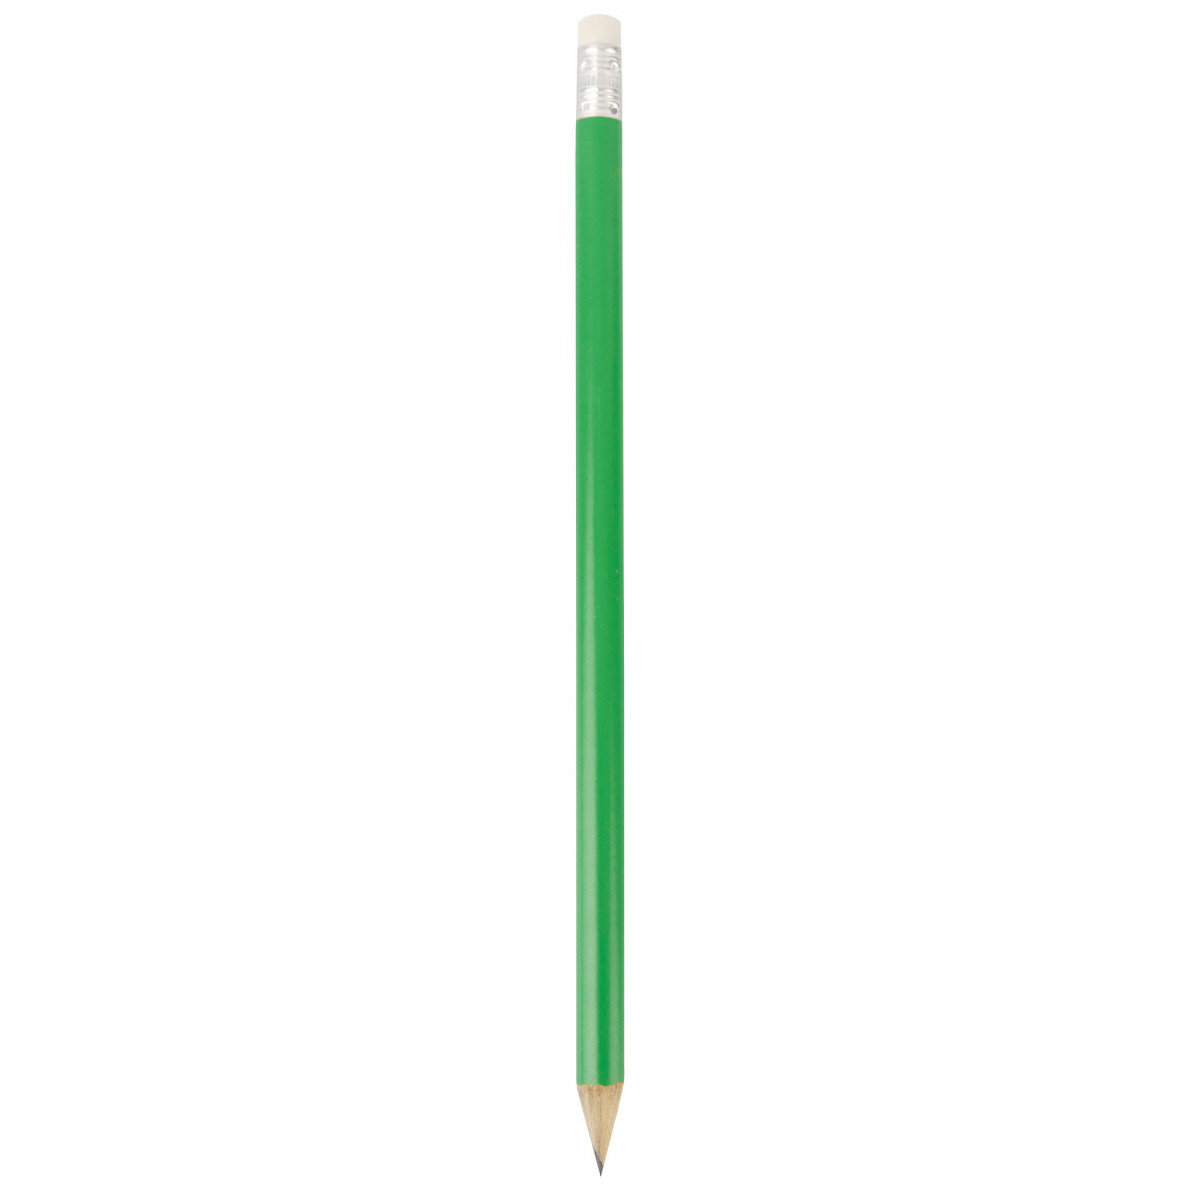 Lápis de borracha de madeira verde